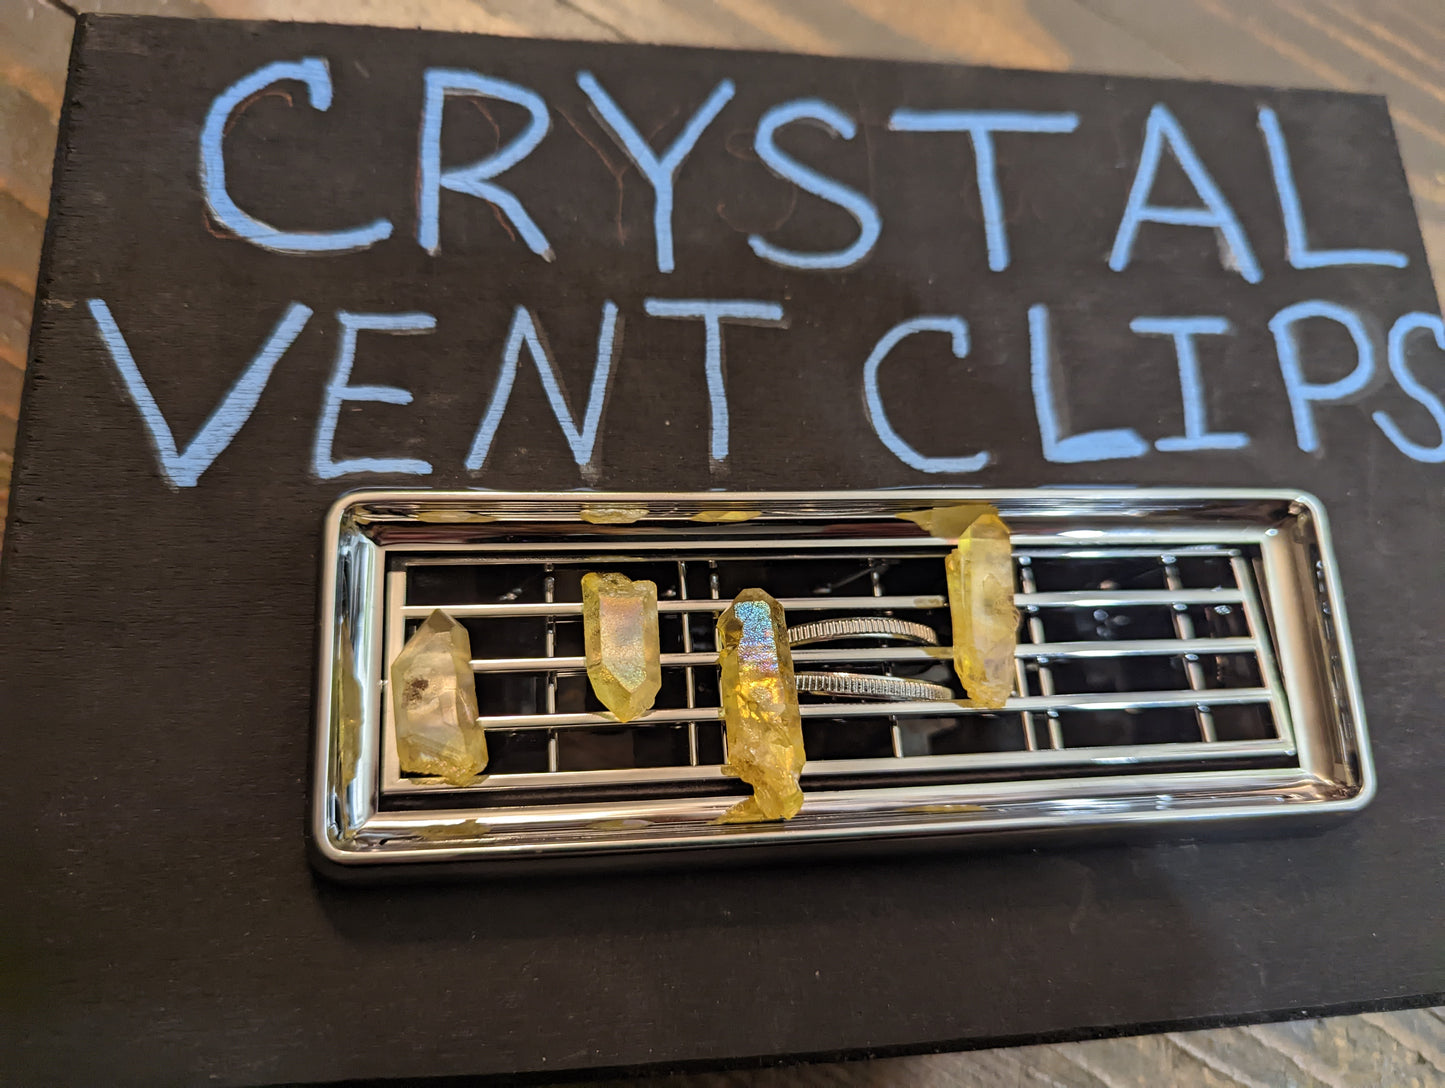 Yellow Aura Crystal "Car-ma" Vent Clips